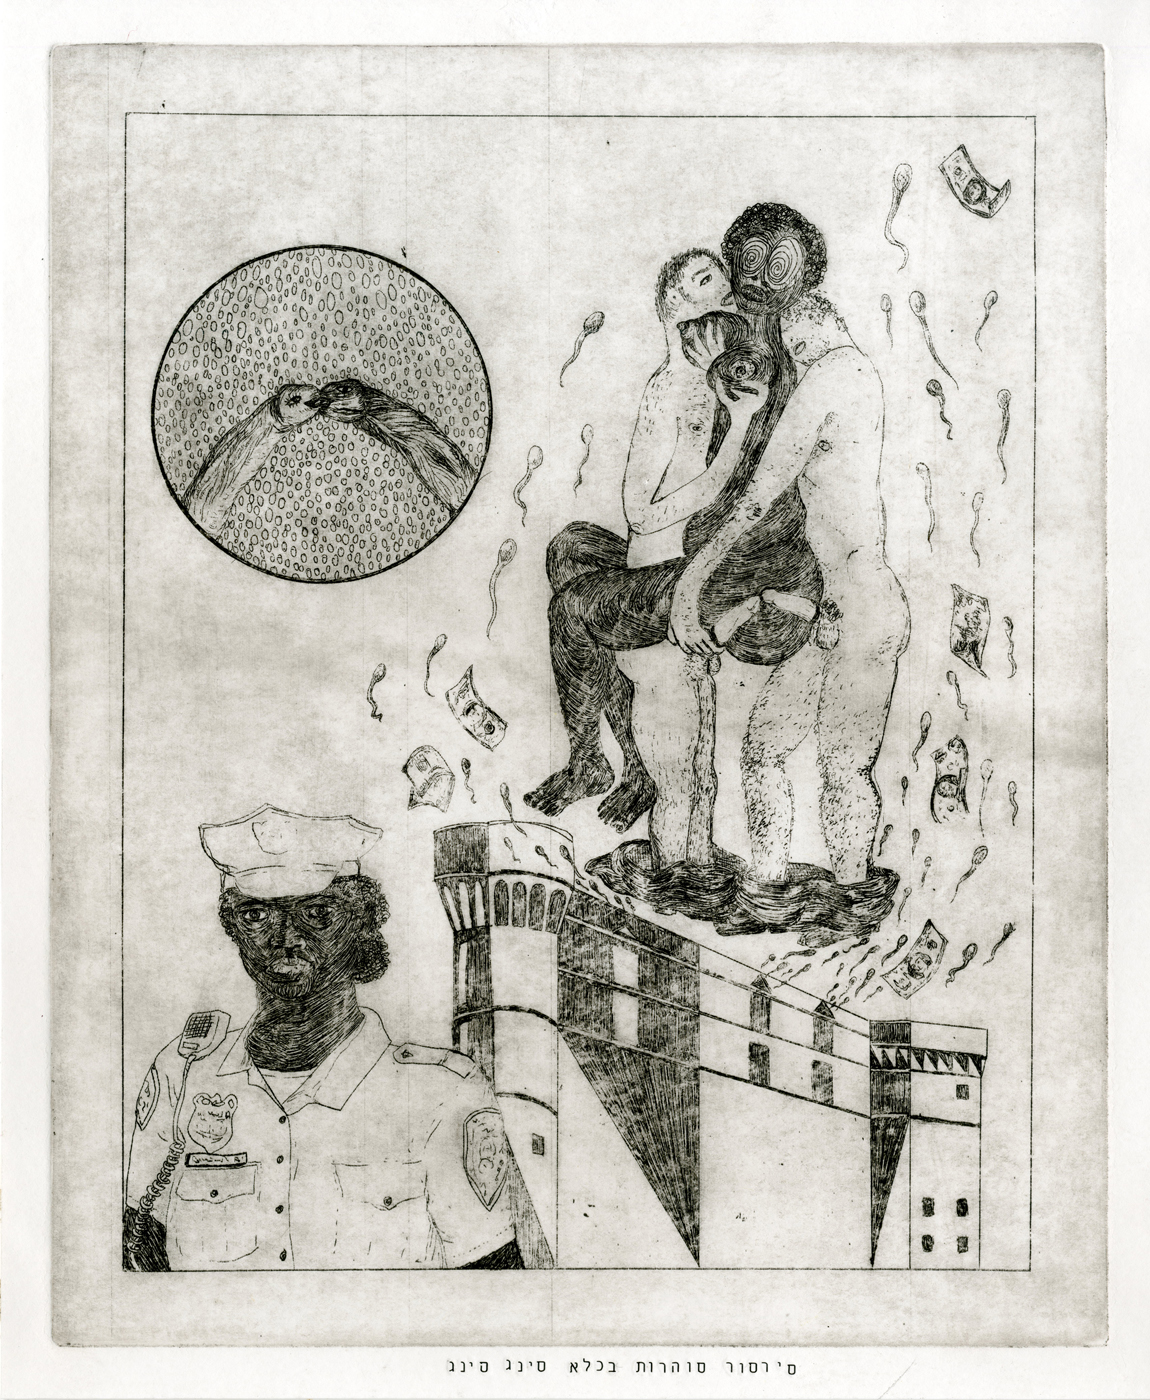 Pimping Prison Guards at Sing Sing Prison, etching, 20X25 cm, 2015